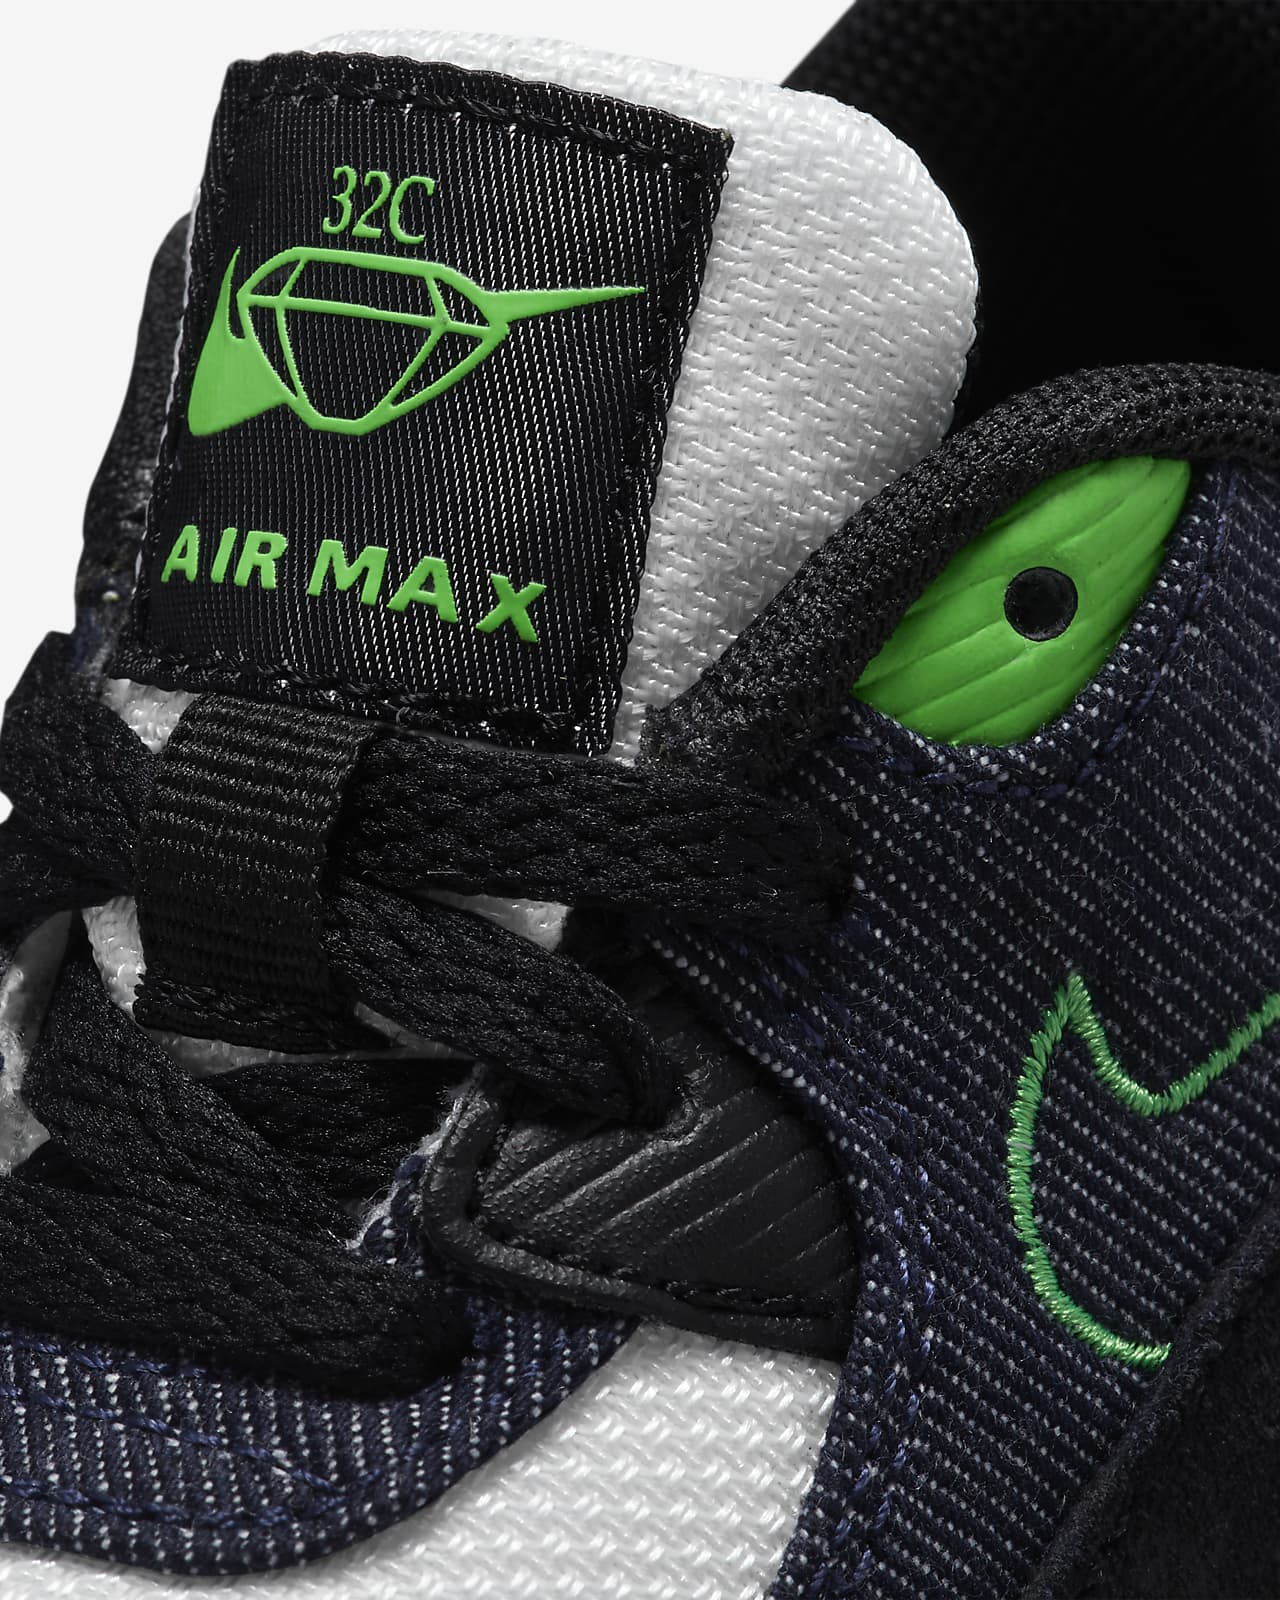 Nike Air Max 90 LTR SE Baby/Toddler Shoes سعر المتر لورق الجدران